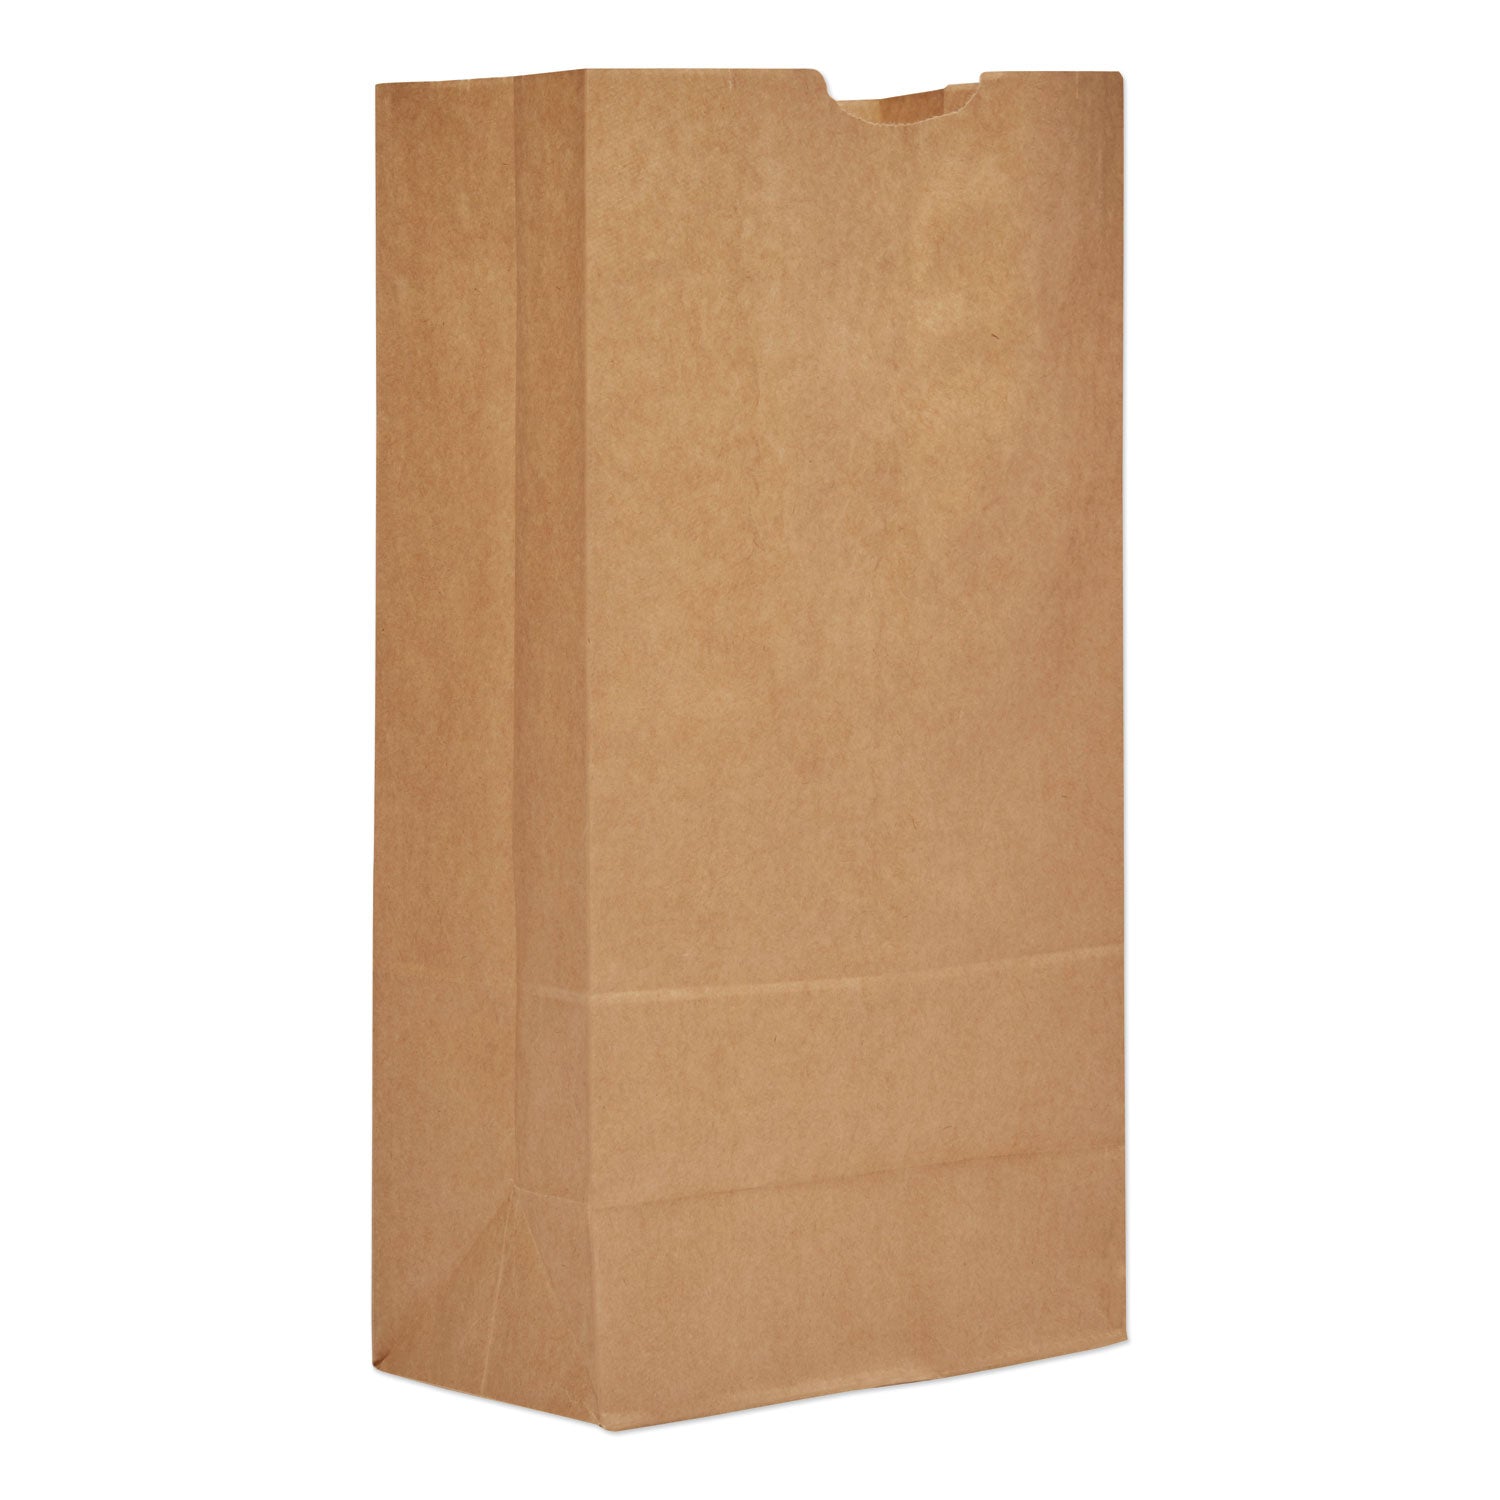 grocery-paper-bags-#20-825-x-594-x-1613-kraft-500-bags_baggk20500 - 1